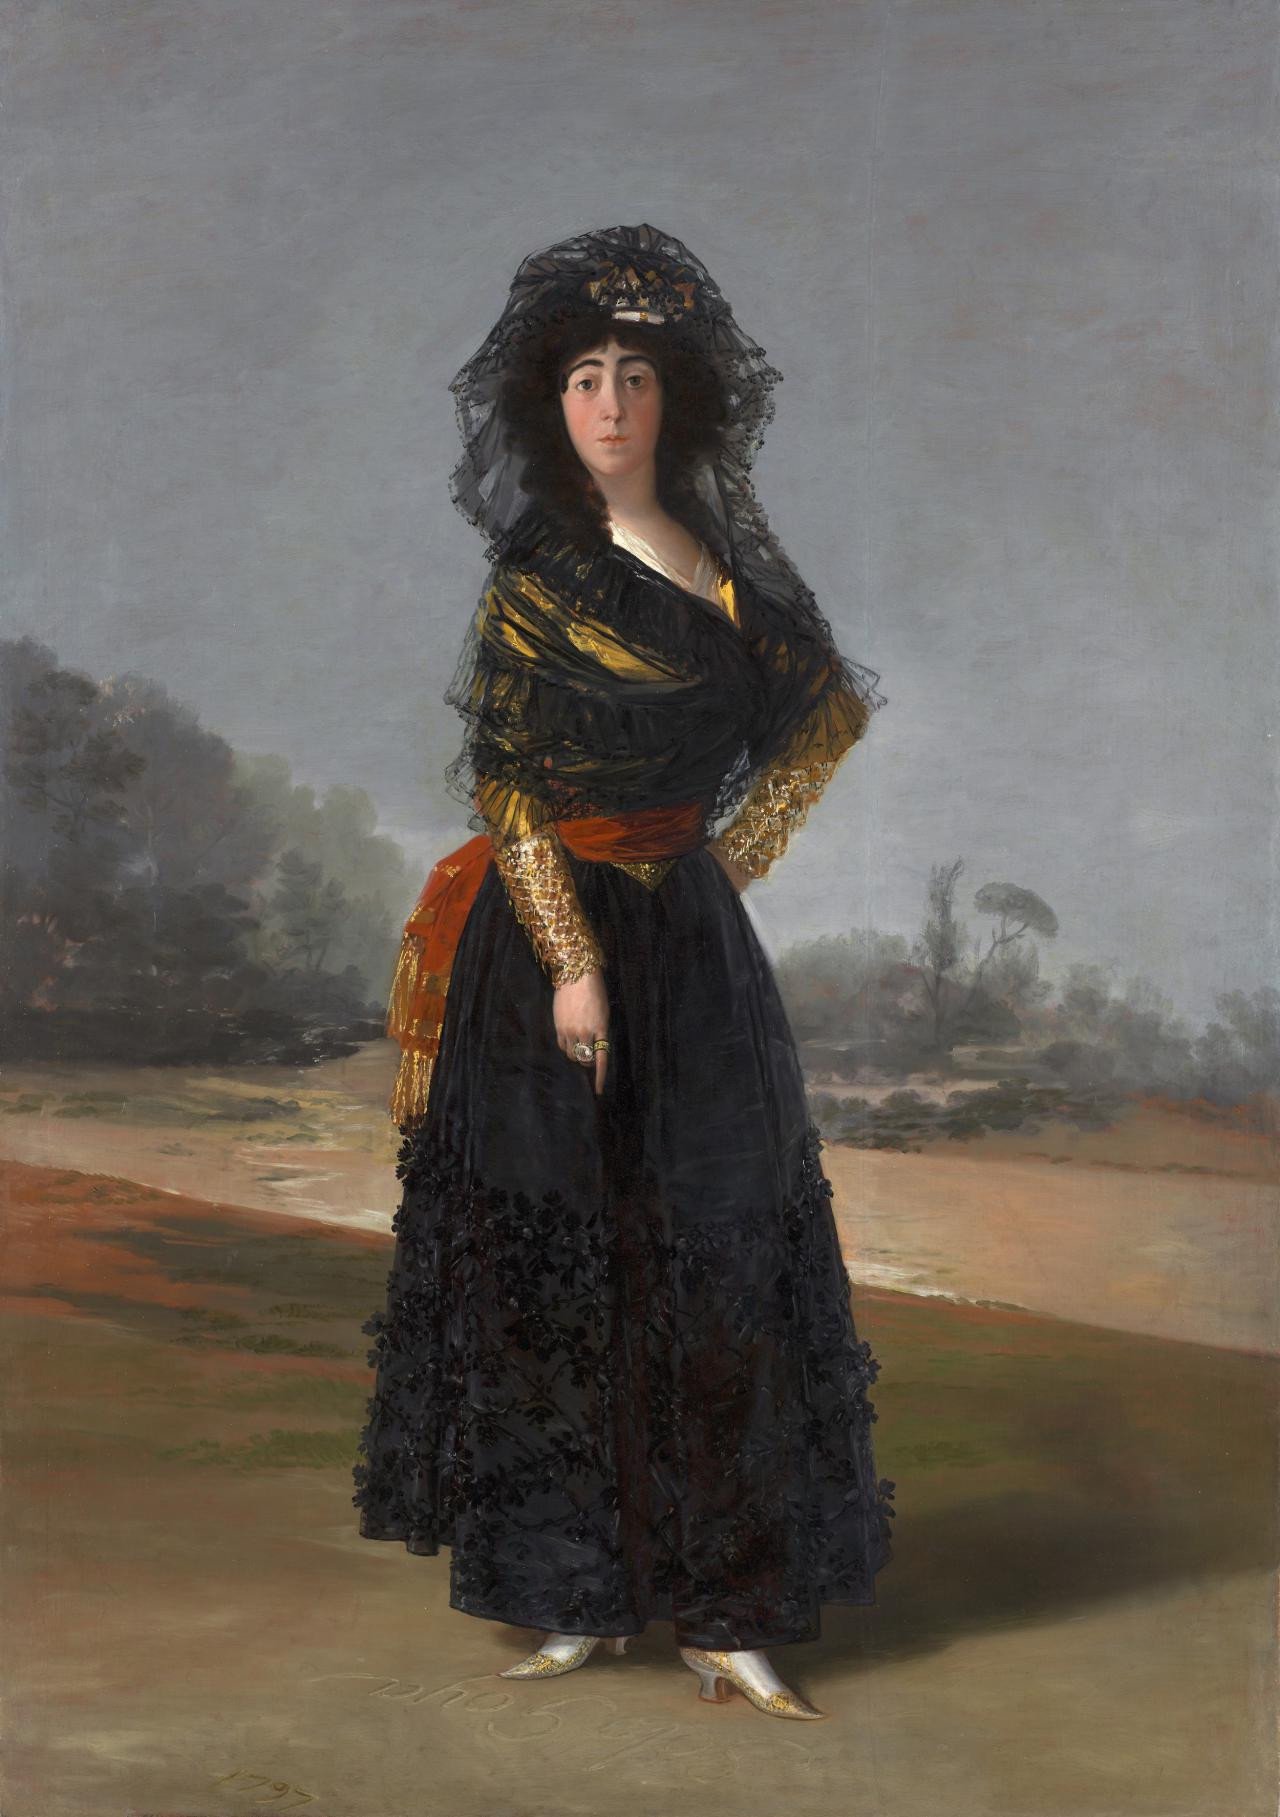 The Duchess of Alba by Francisco Goya - 1797 - 210 x 148 cm Hispanic Society Museum & Library